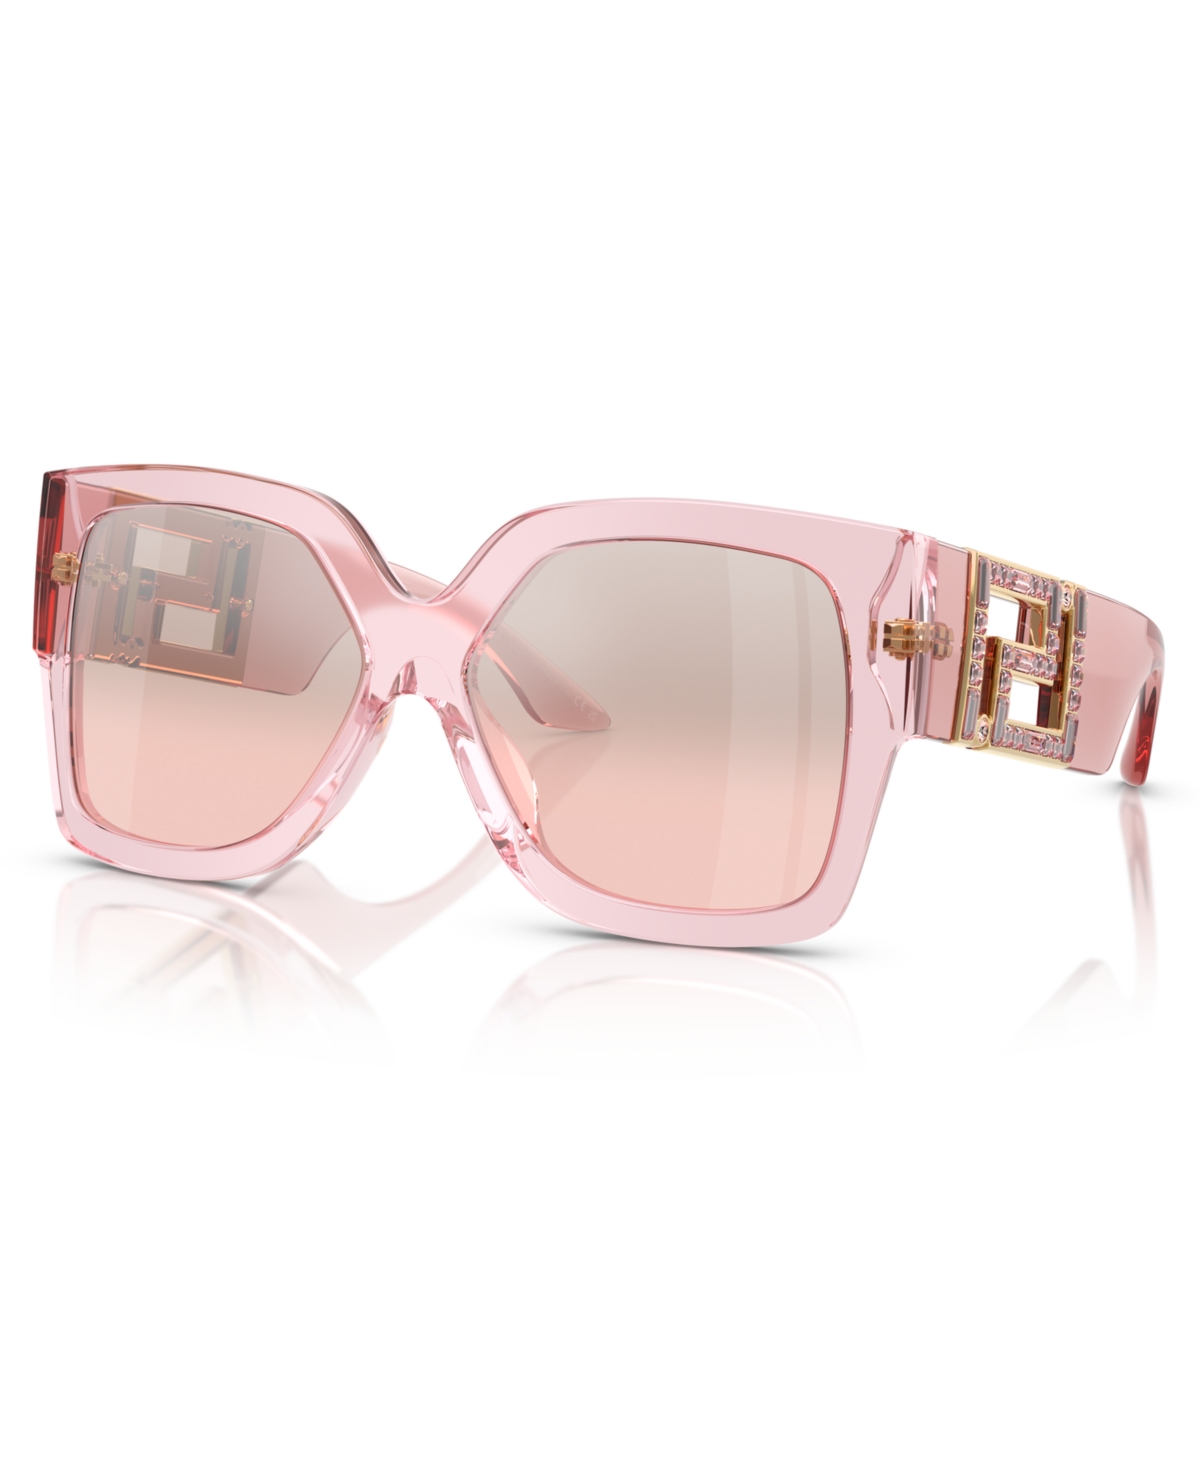 Women's Sunglasses, Ve4402 - Transparent Pink